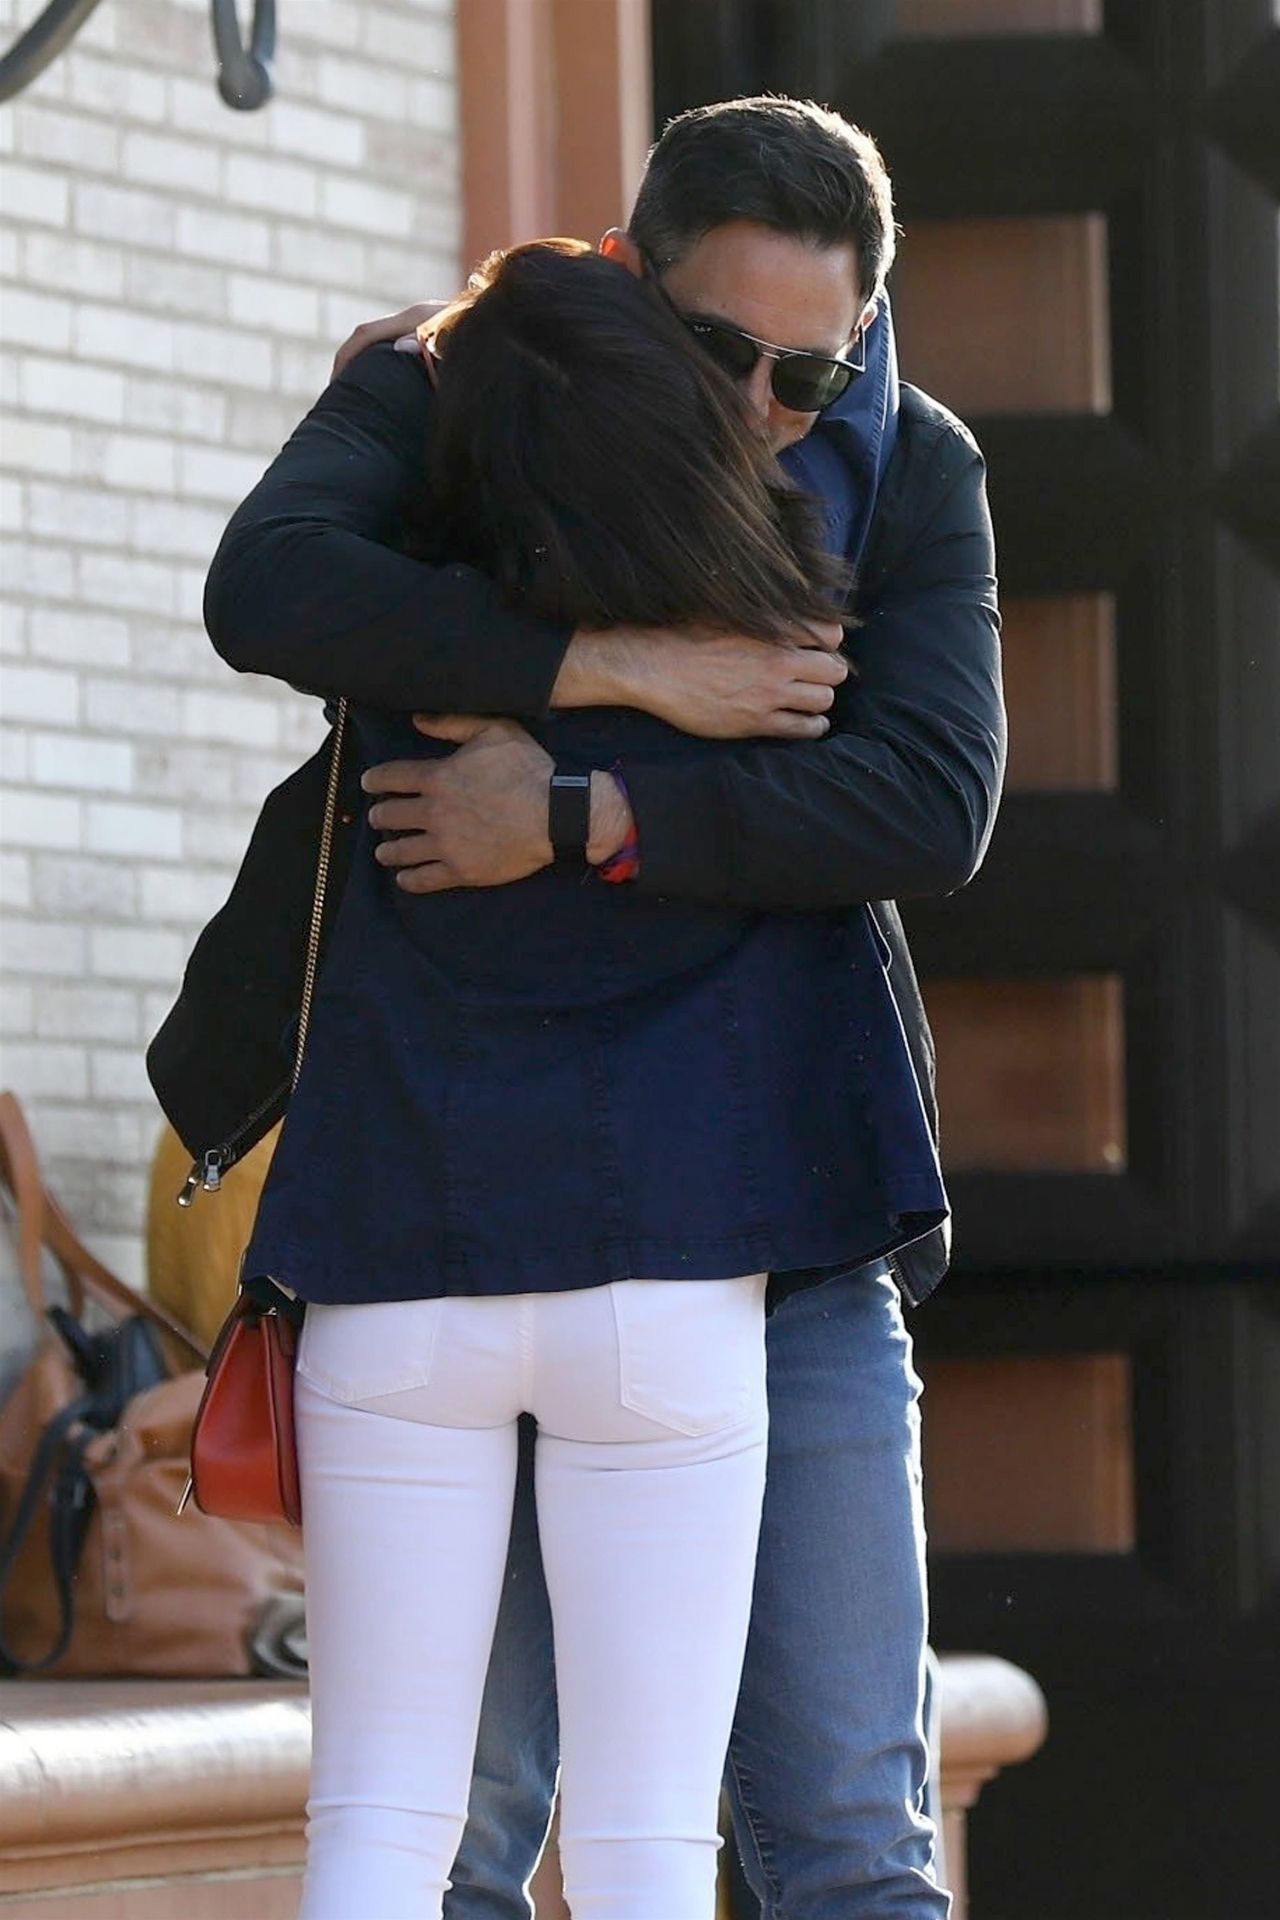 Jenna Dewan and Her New Boyfriend Steve Kazee at Pressed Juicery in